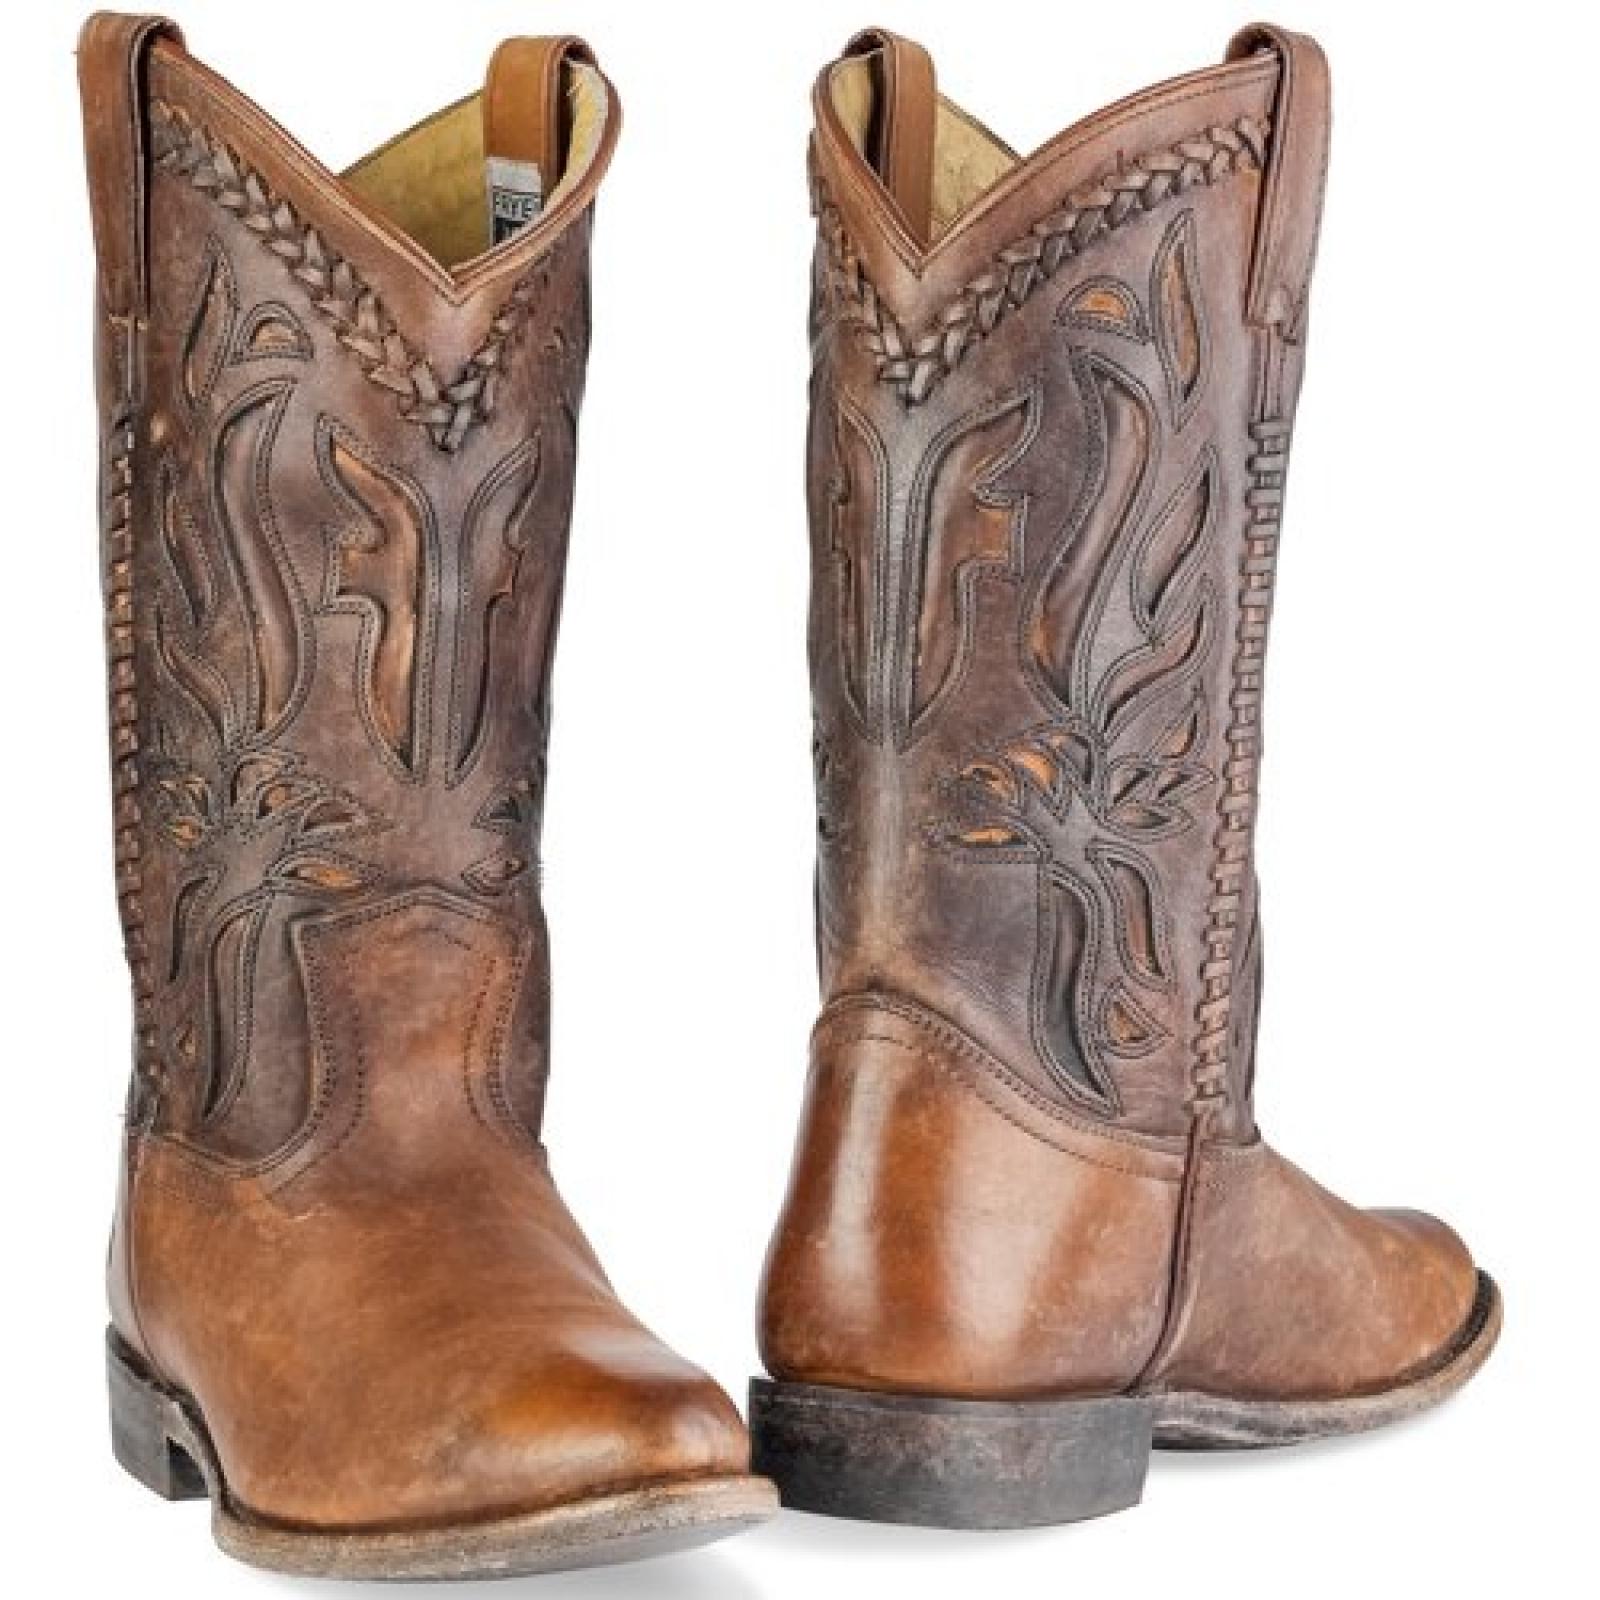 Frye Dames Wyatt Overlay Boots Cognac - Damen western stiefel 